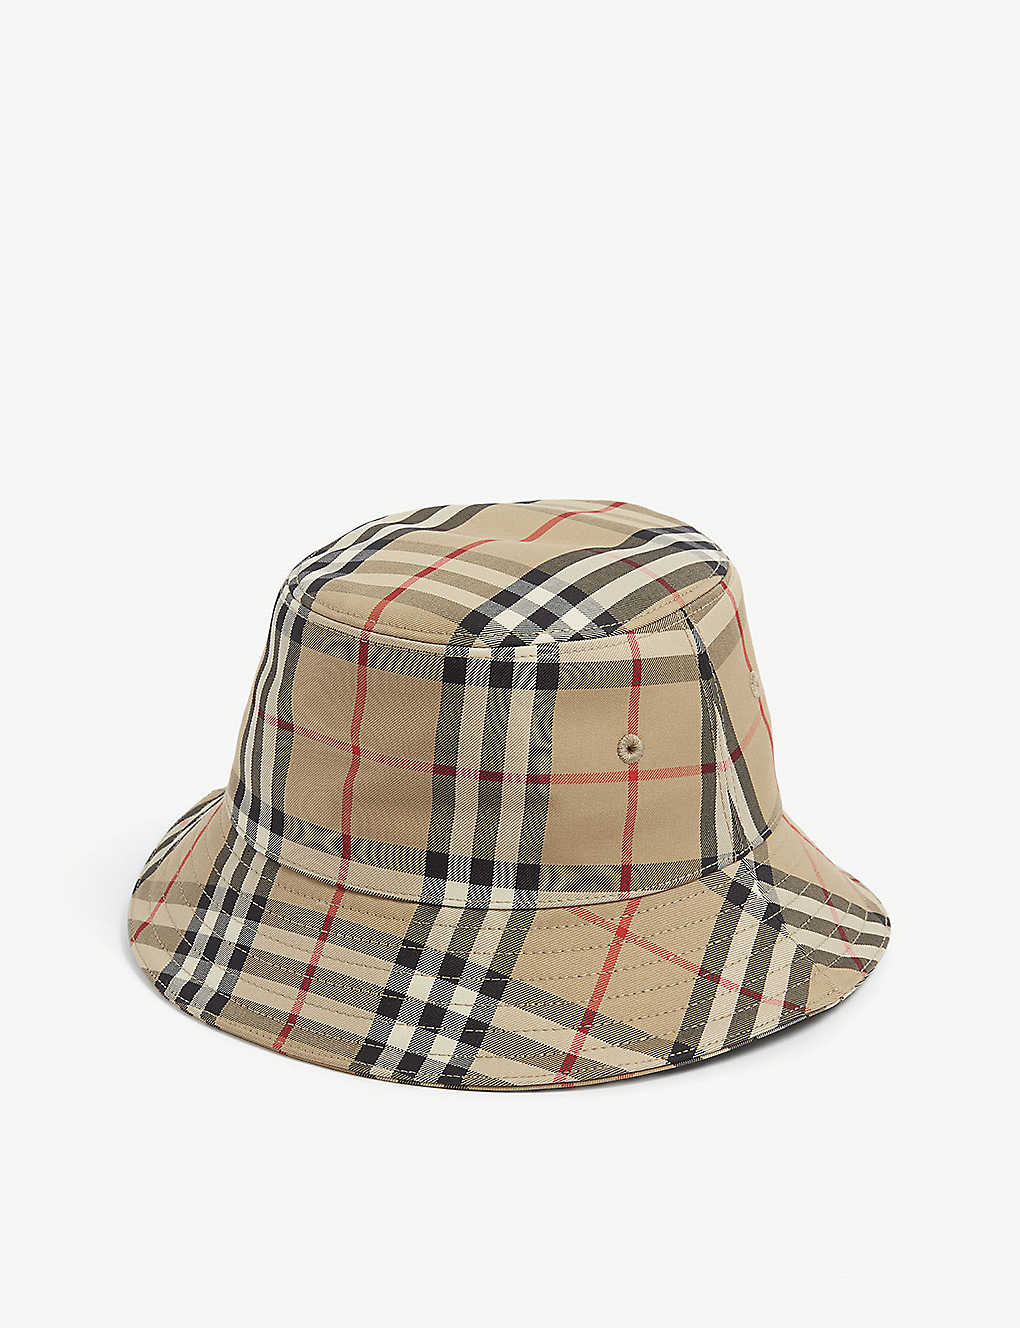 Selfridges & Co Boys Accessories Headwear Hats Gabriell checked cotton-blend bucket hat 4-12 years 